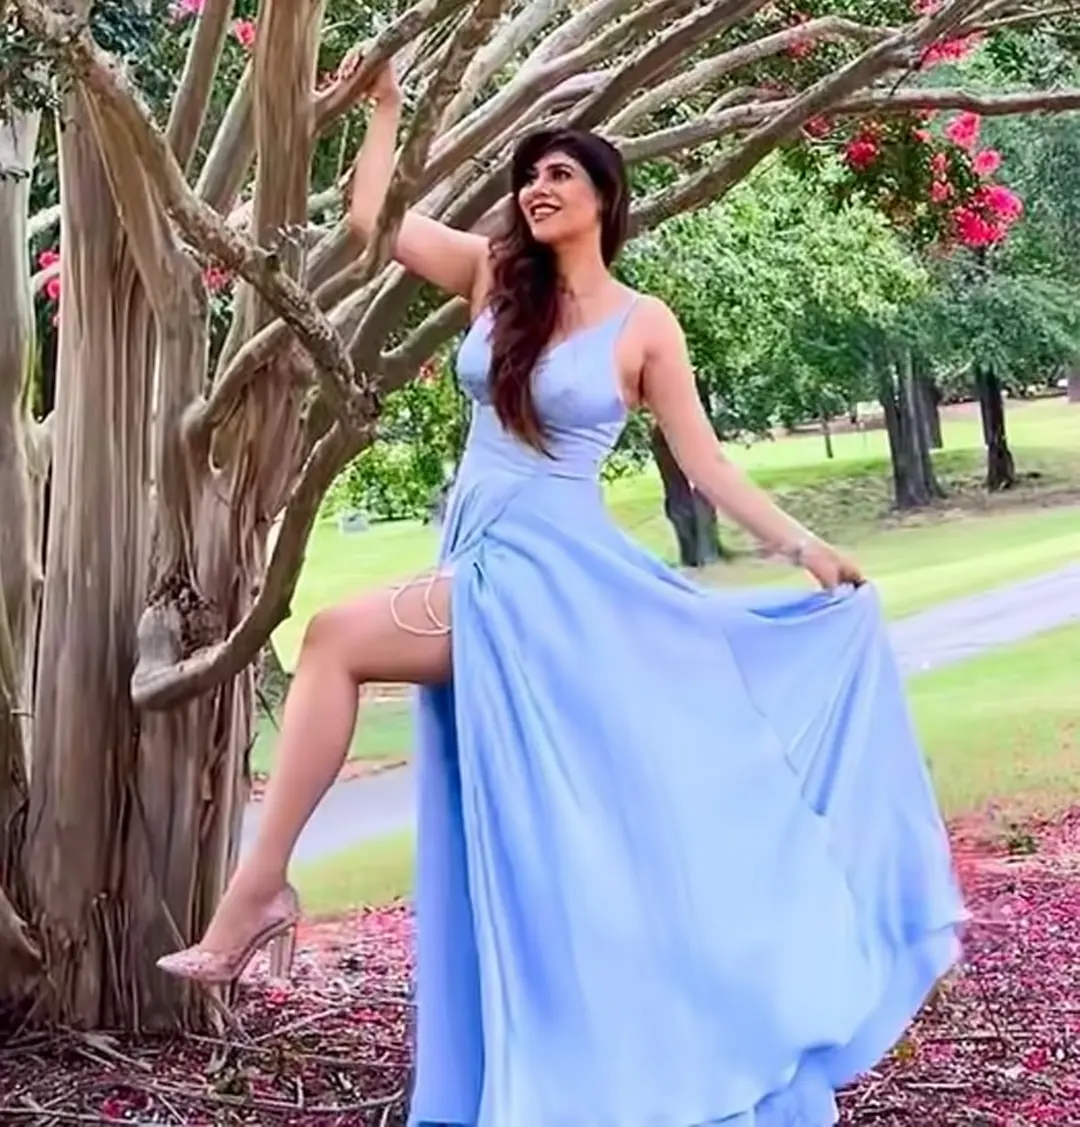 actress sherin shringar hot photos in short dress getting viral